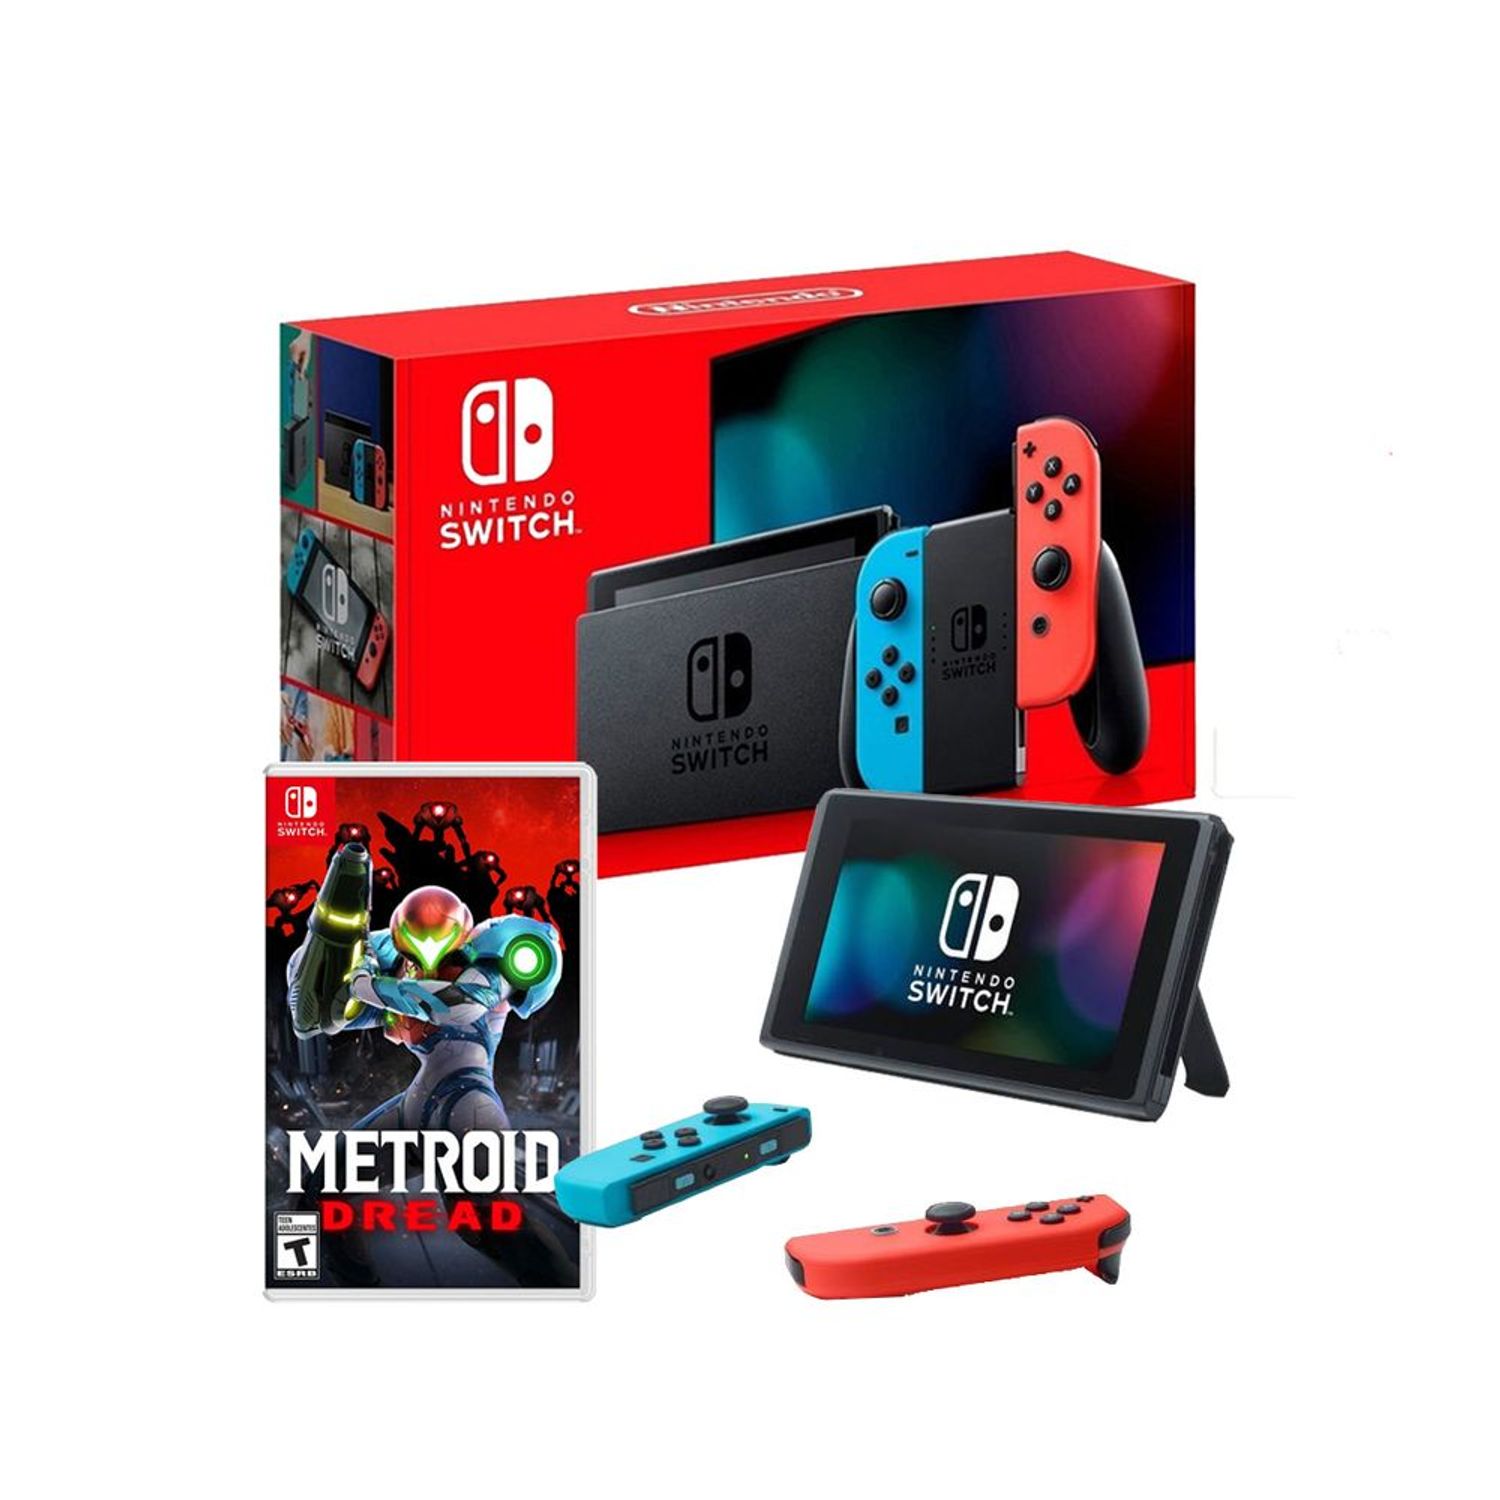 Disgusto Clancy Evolucionar Consola Nintendo Switch Neon 2019 Metroid Dread Oechsle | duyhao.com.vn